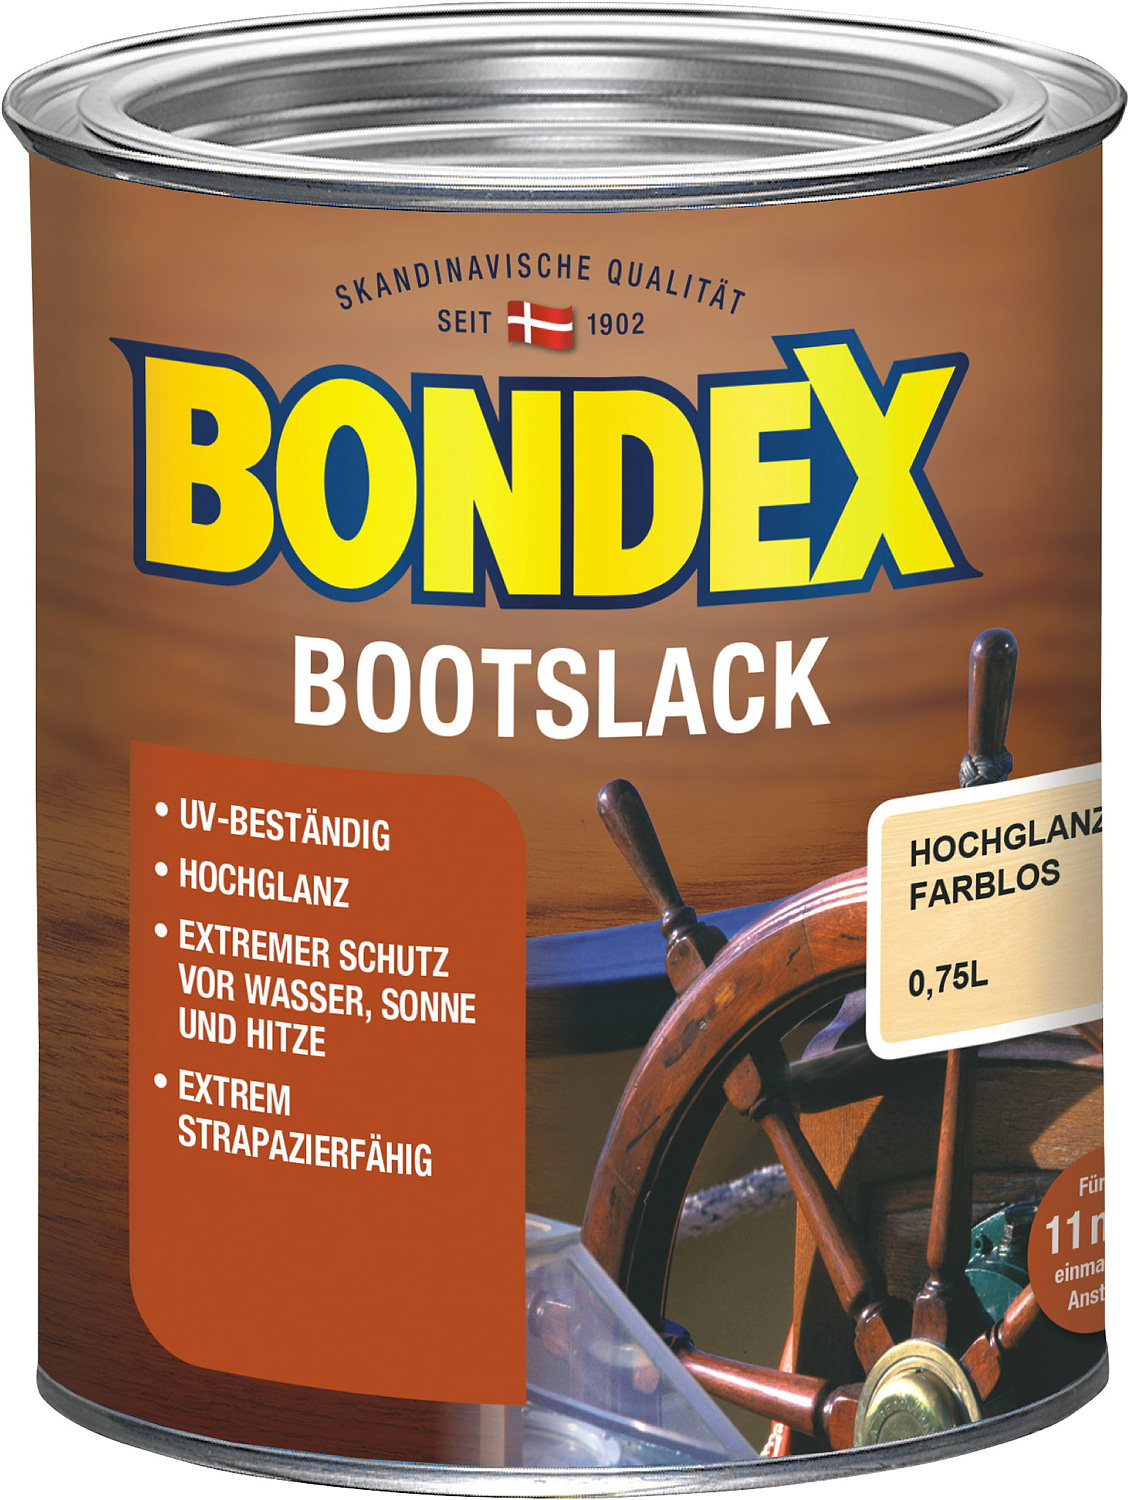 Bondex Bootslack Farblos  0,75l